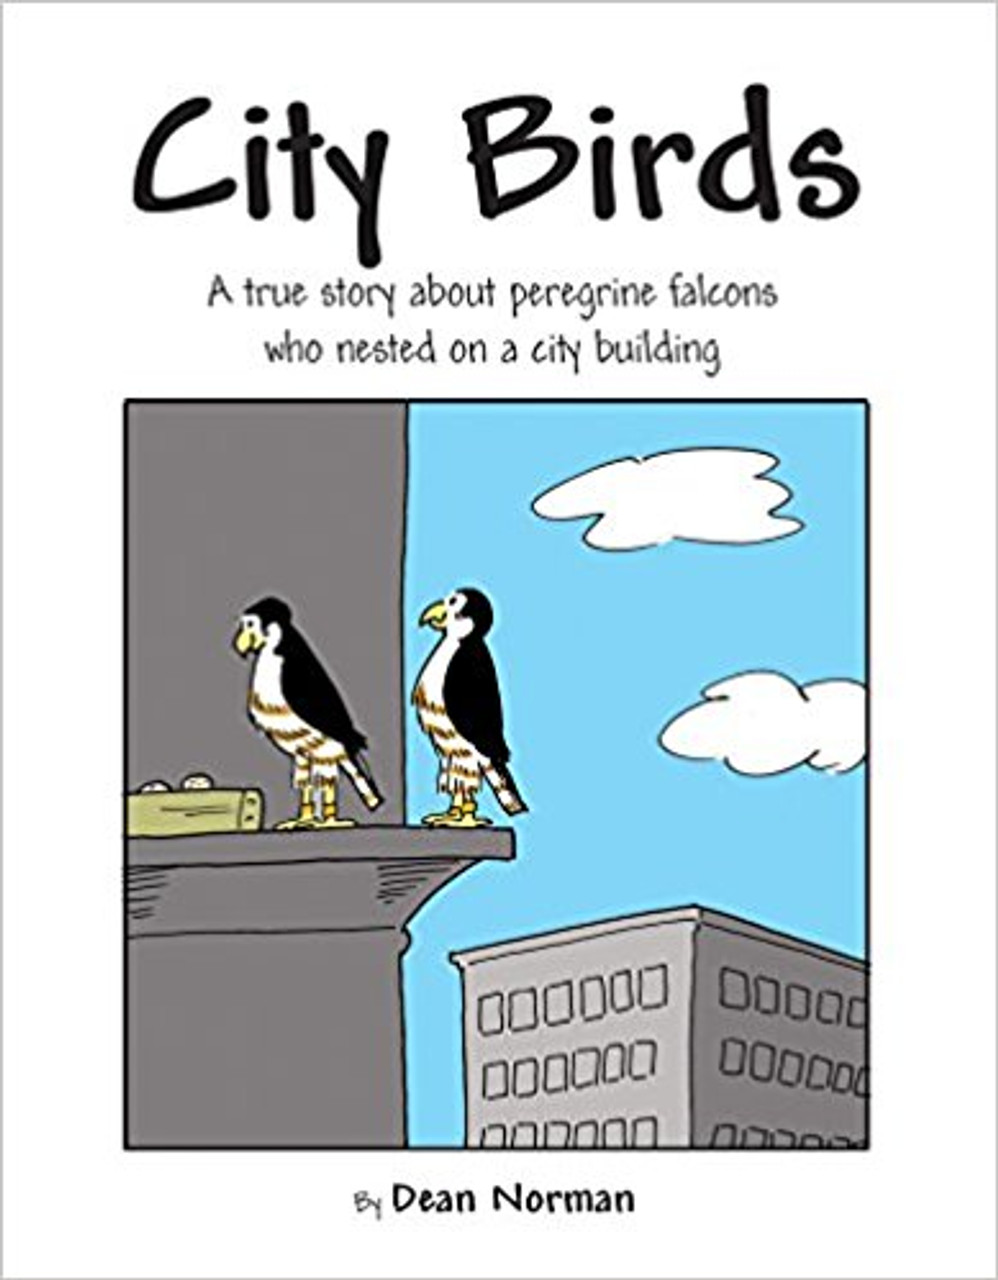 City Birds by Dean Norman